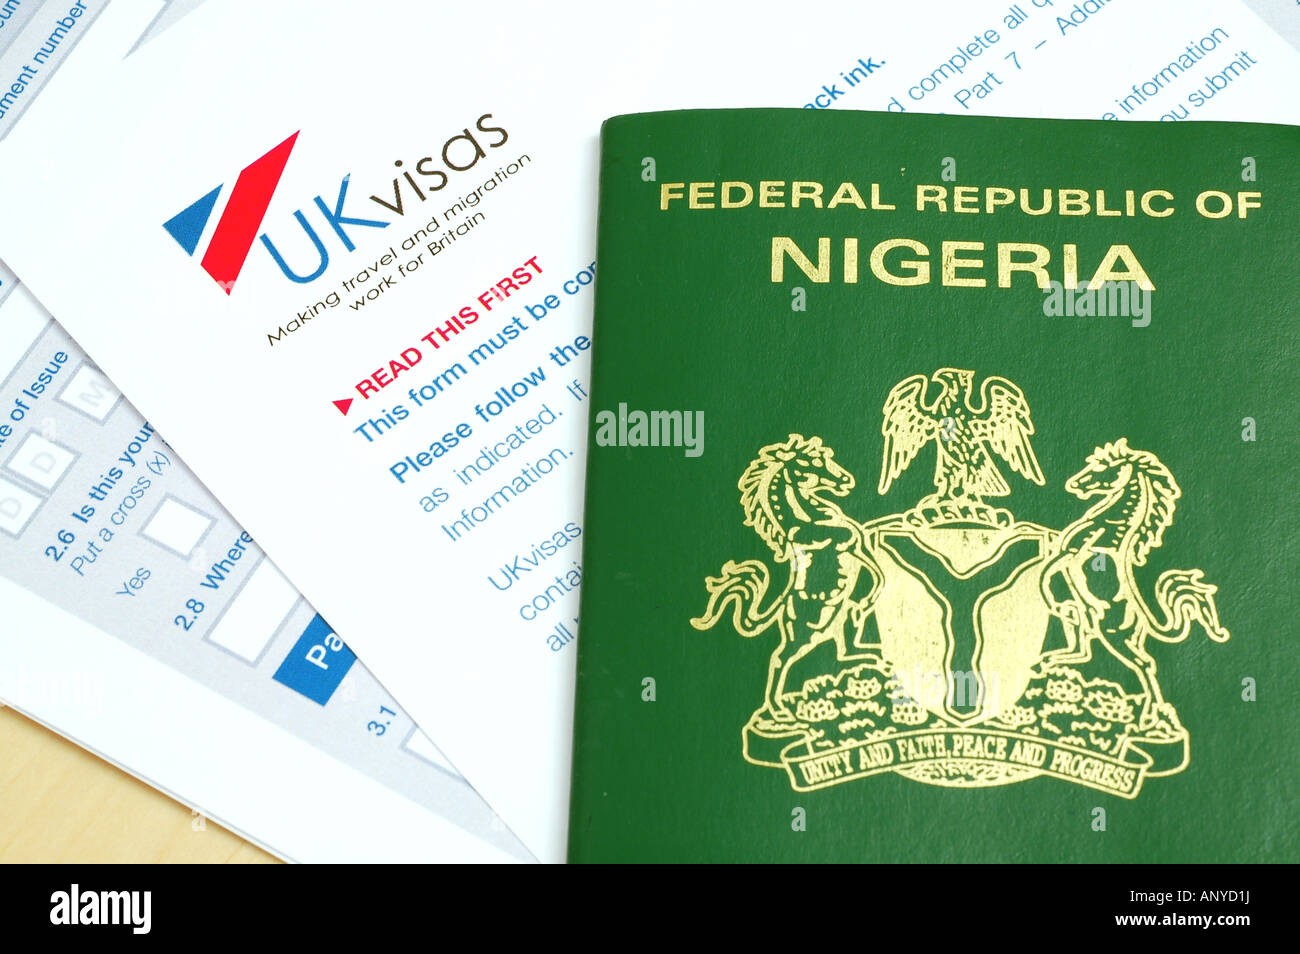 UK visa application form and Nigerian passport Stock Photo - Alamy